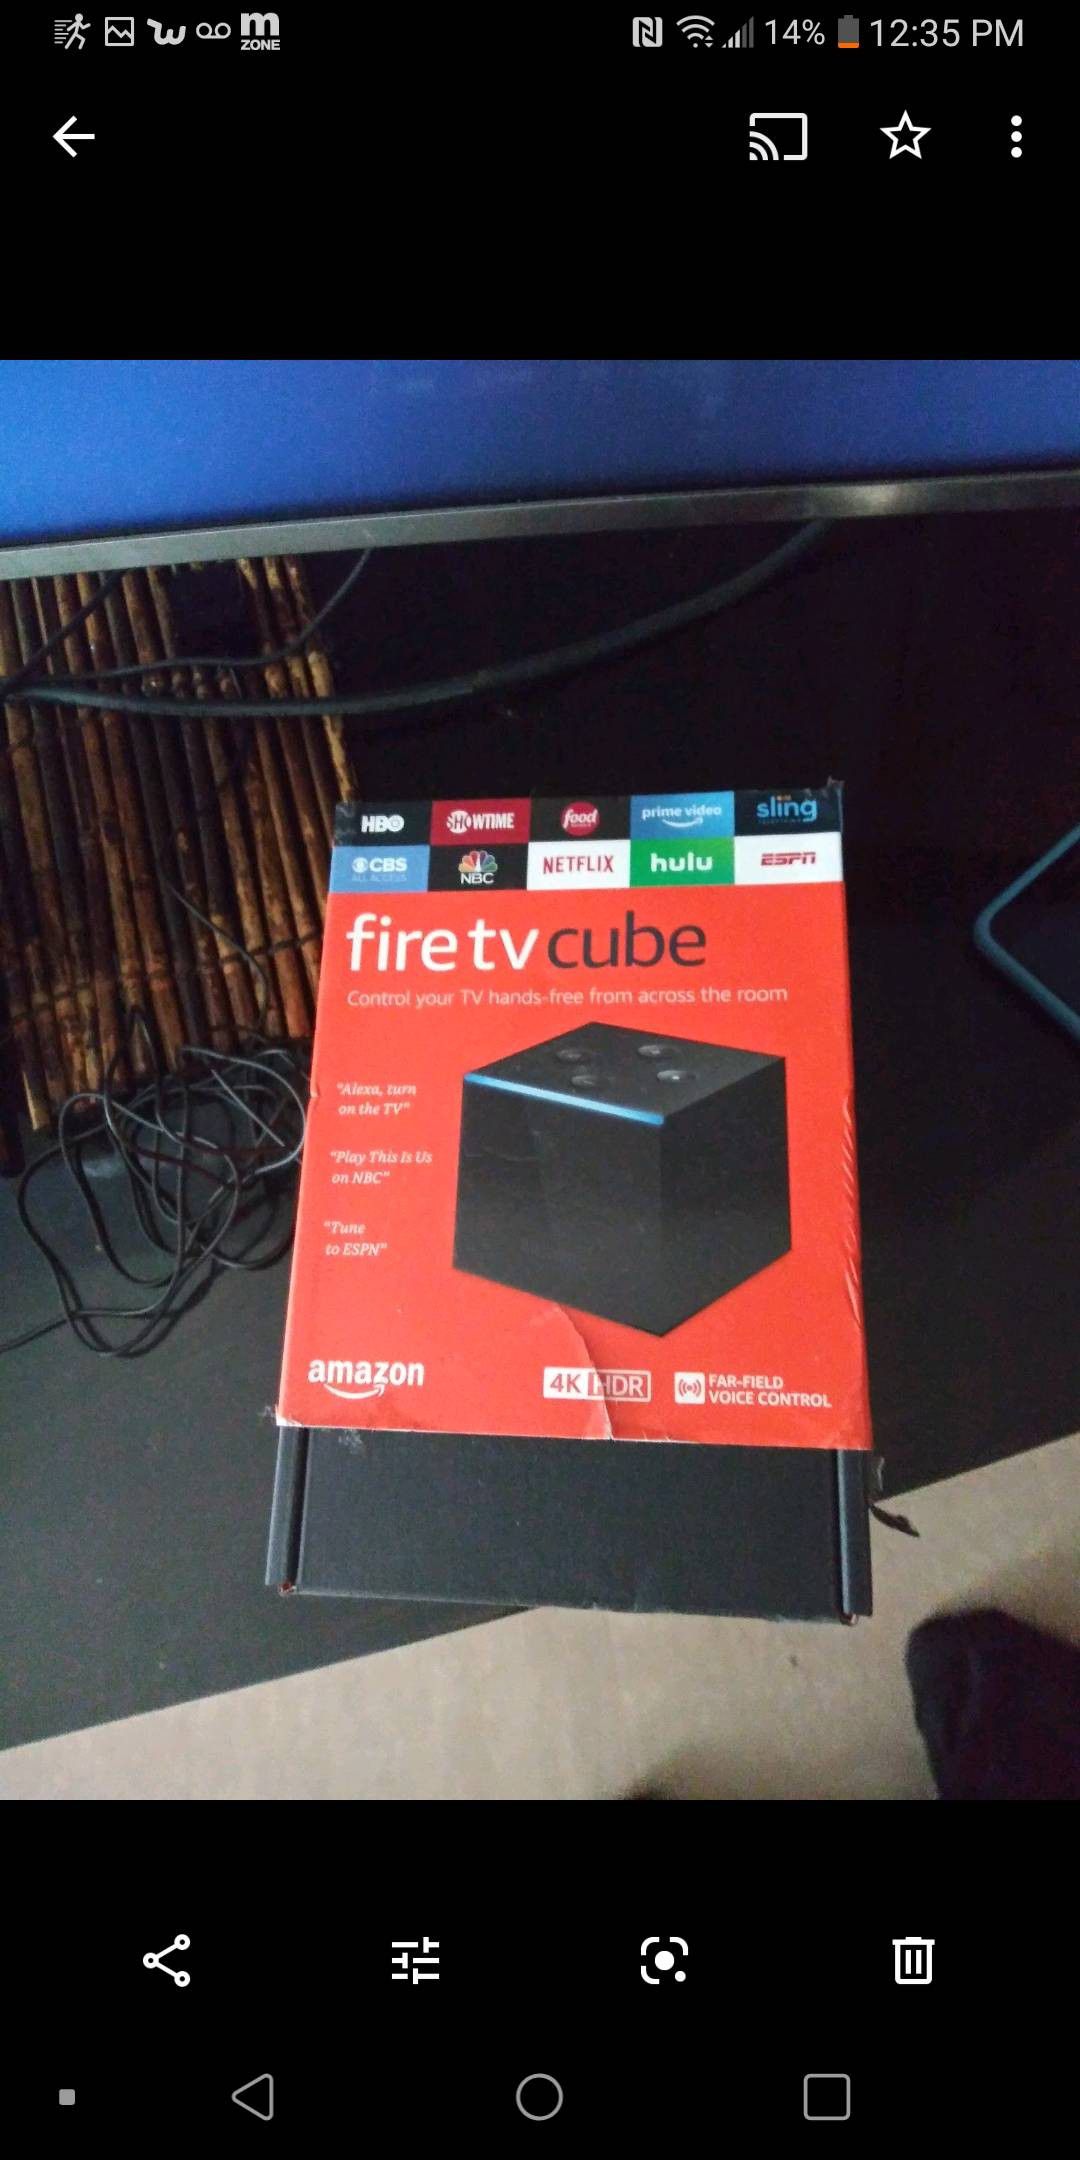 Amazon fire cube